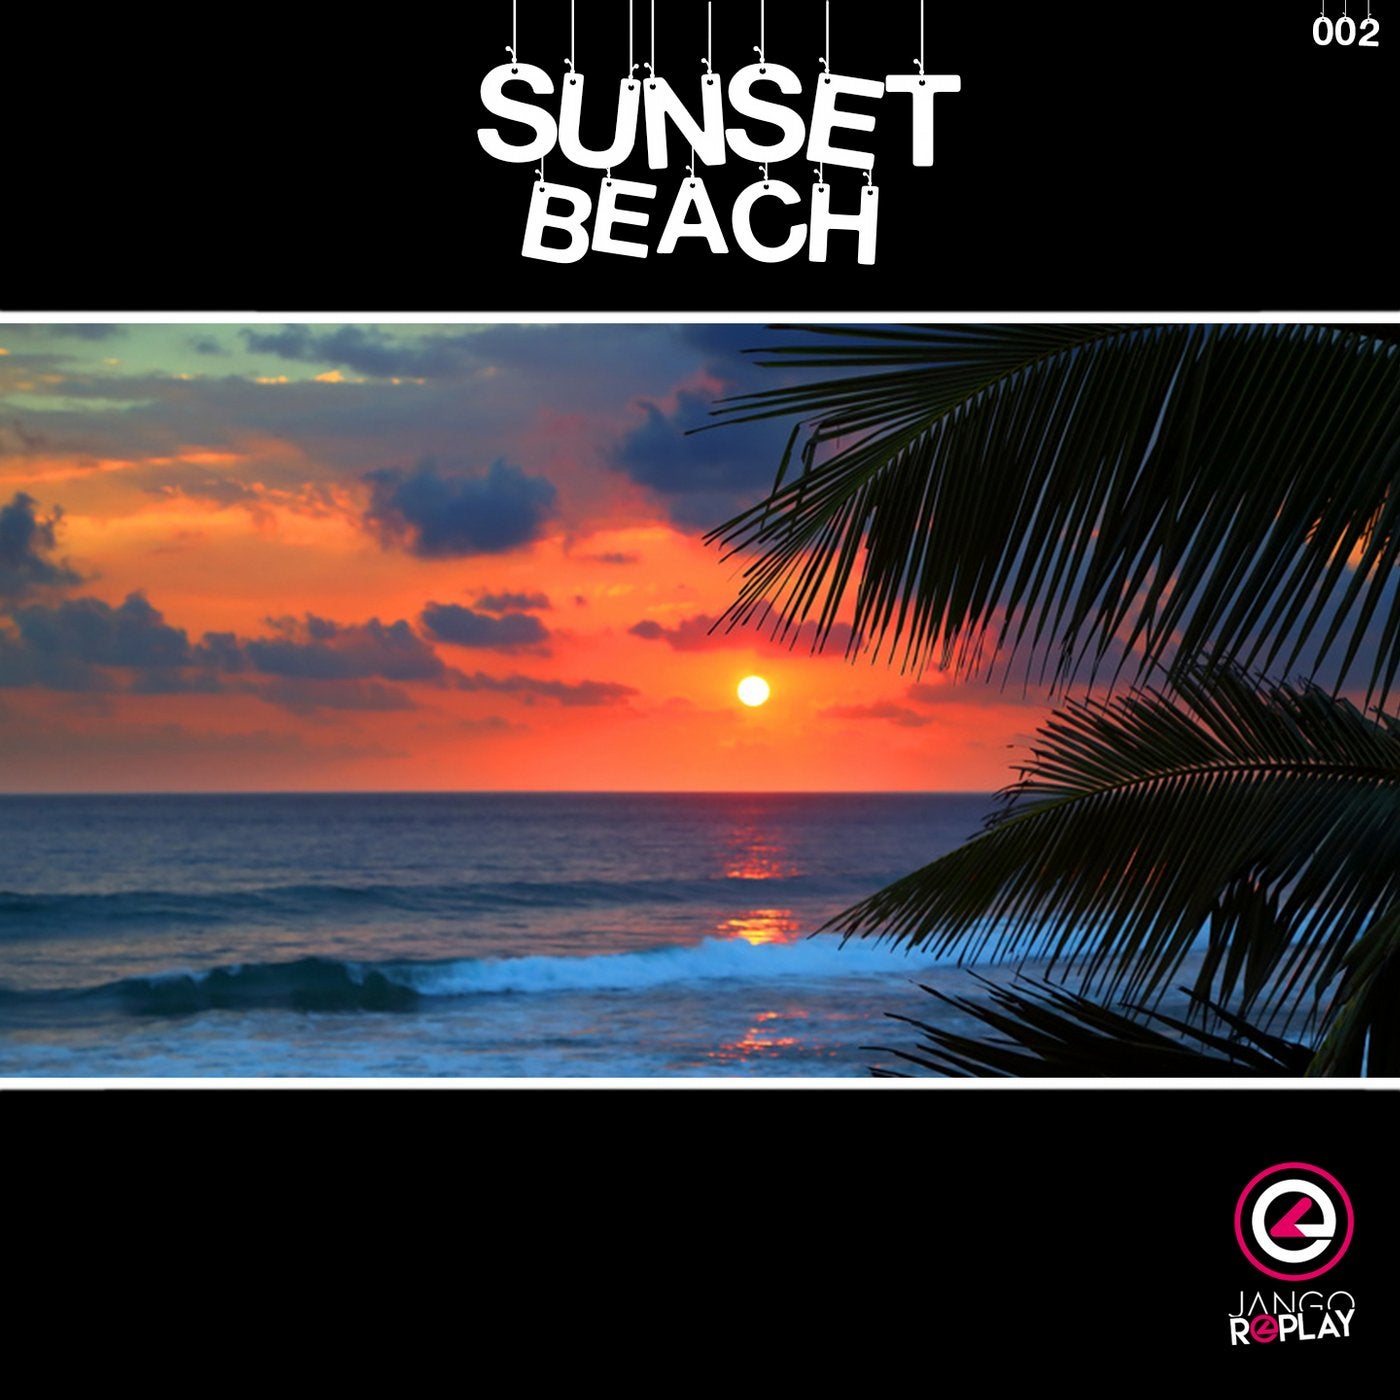 Sunset Beach #002